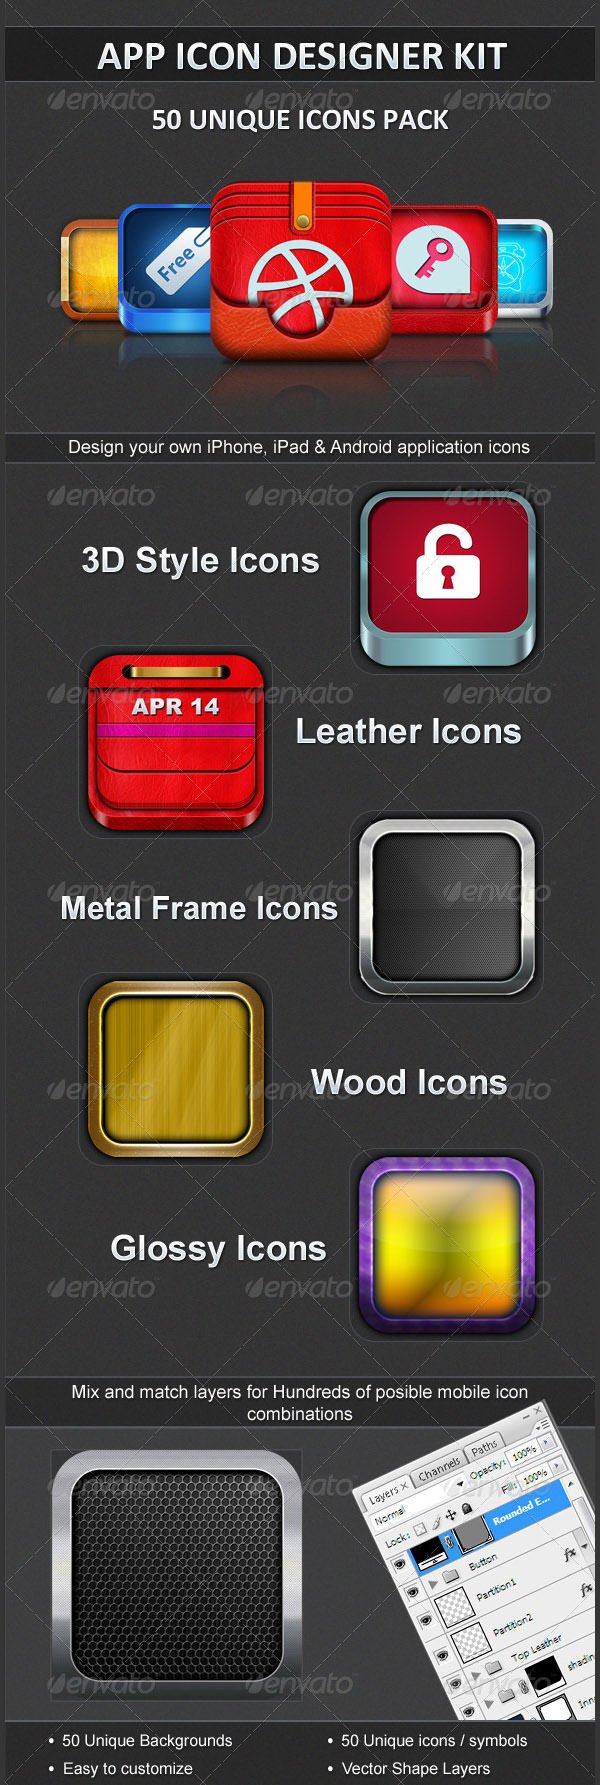 app-icon-designer-kit